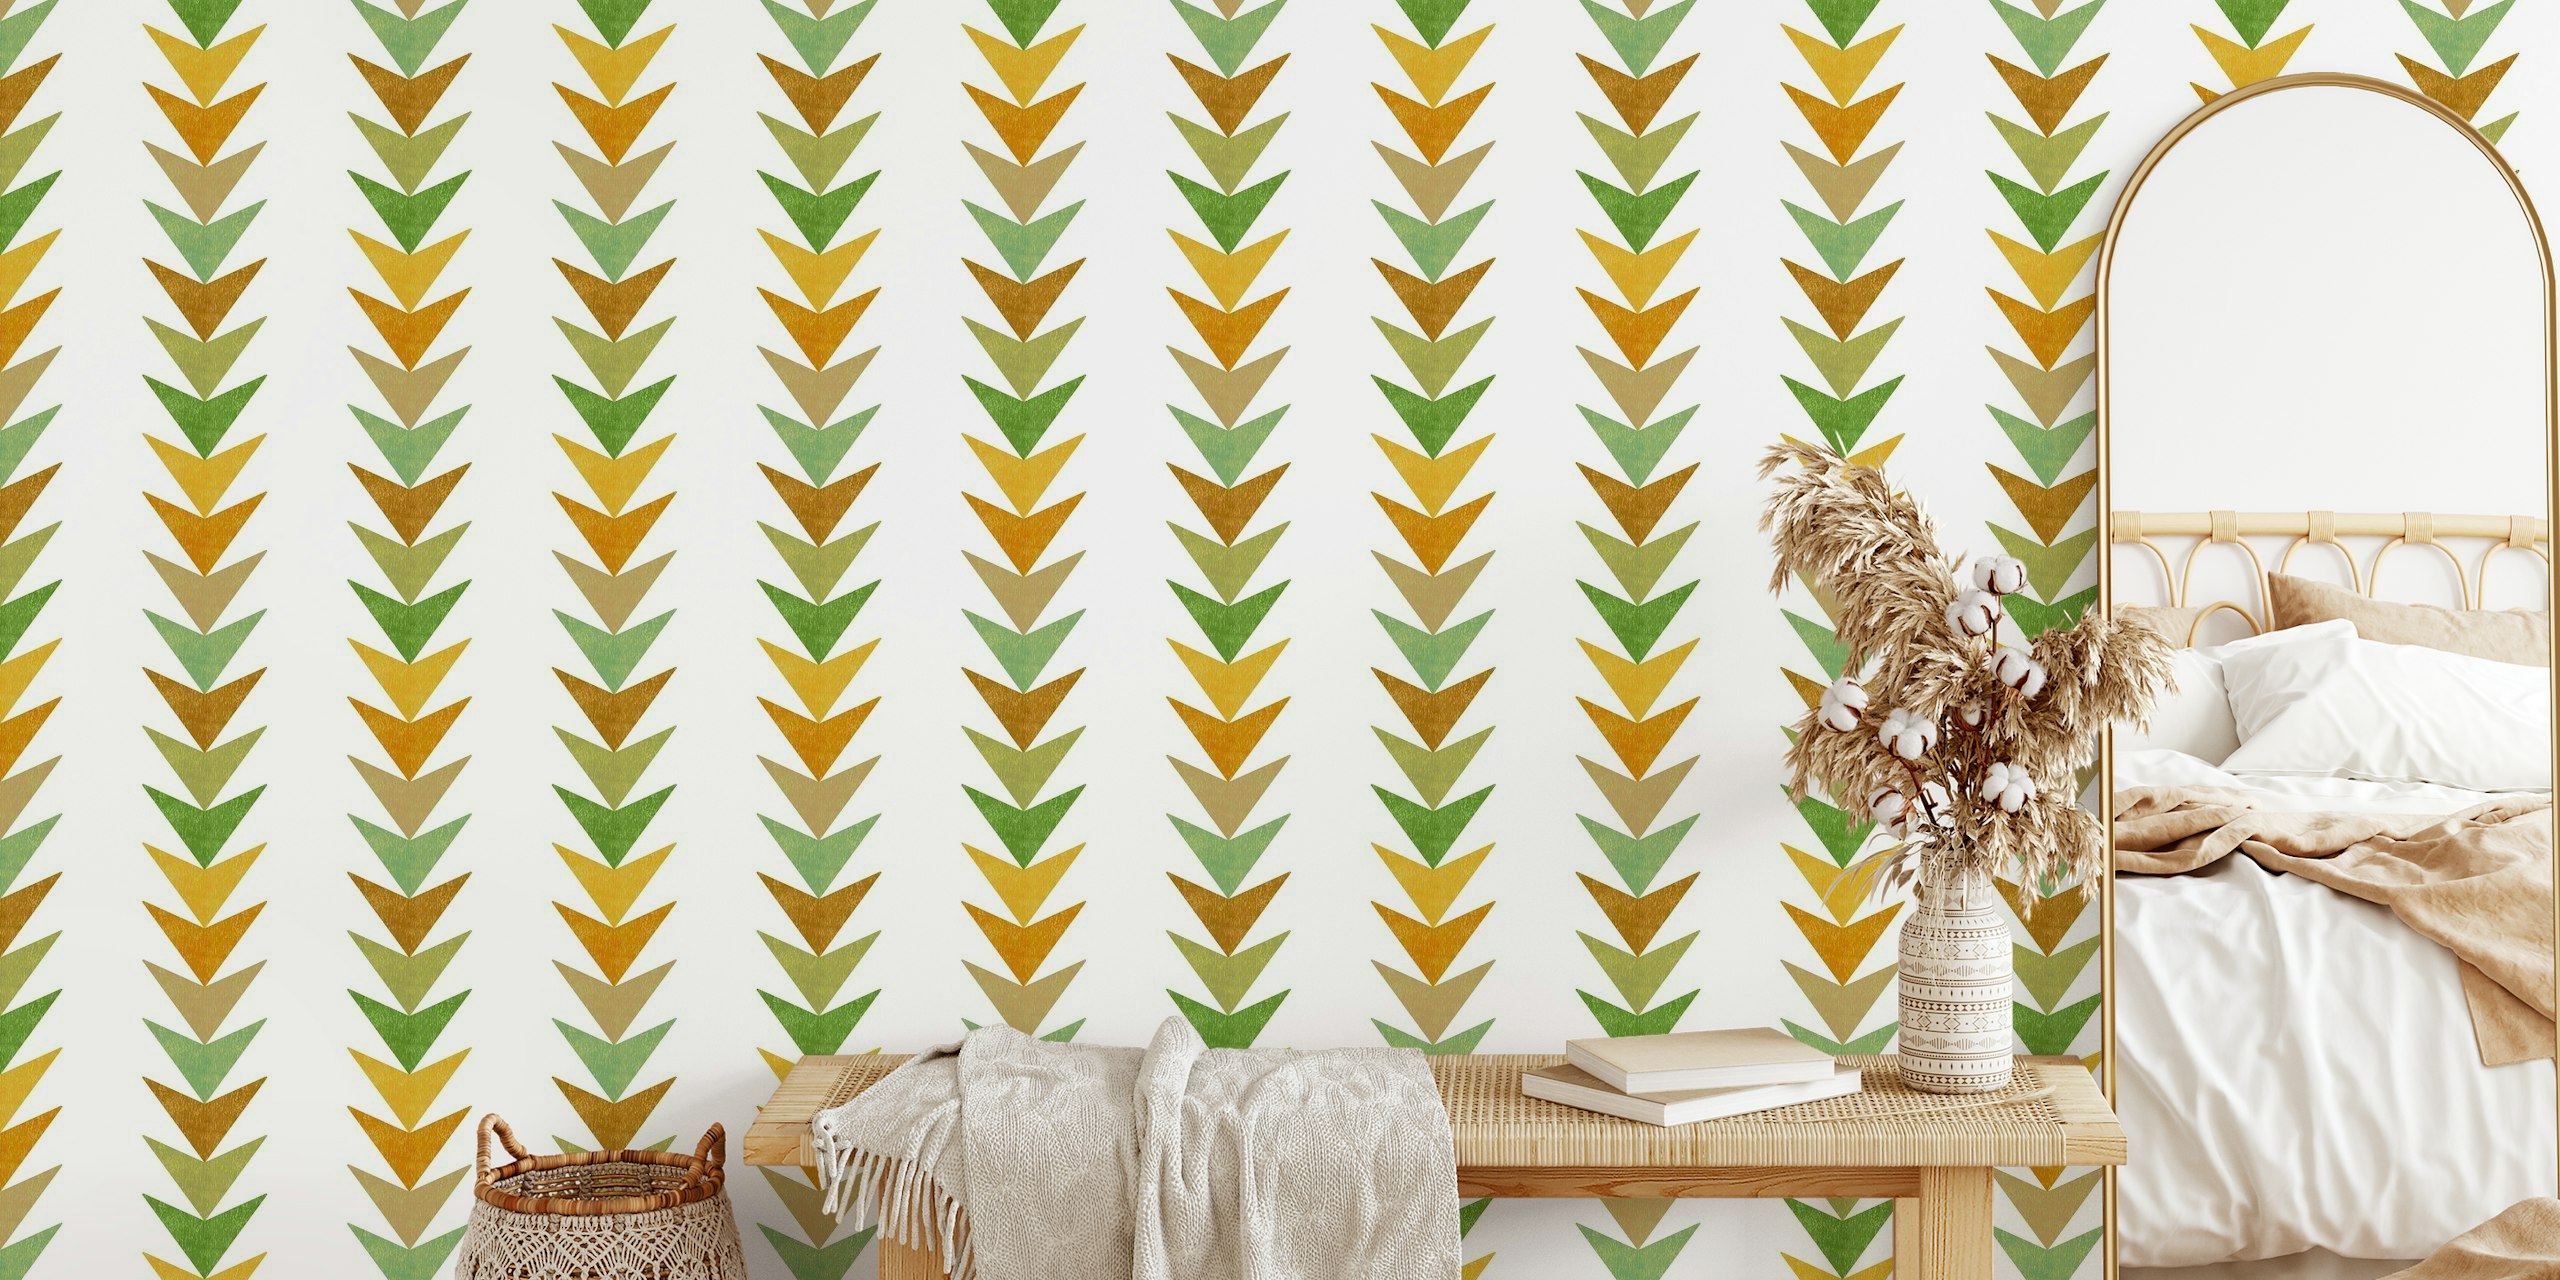 Arrows Stripes - Earth Colors smaller wallpaper